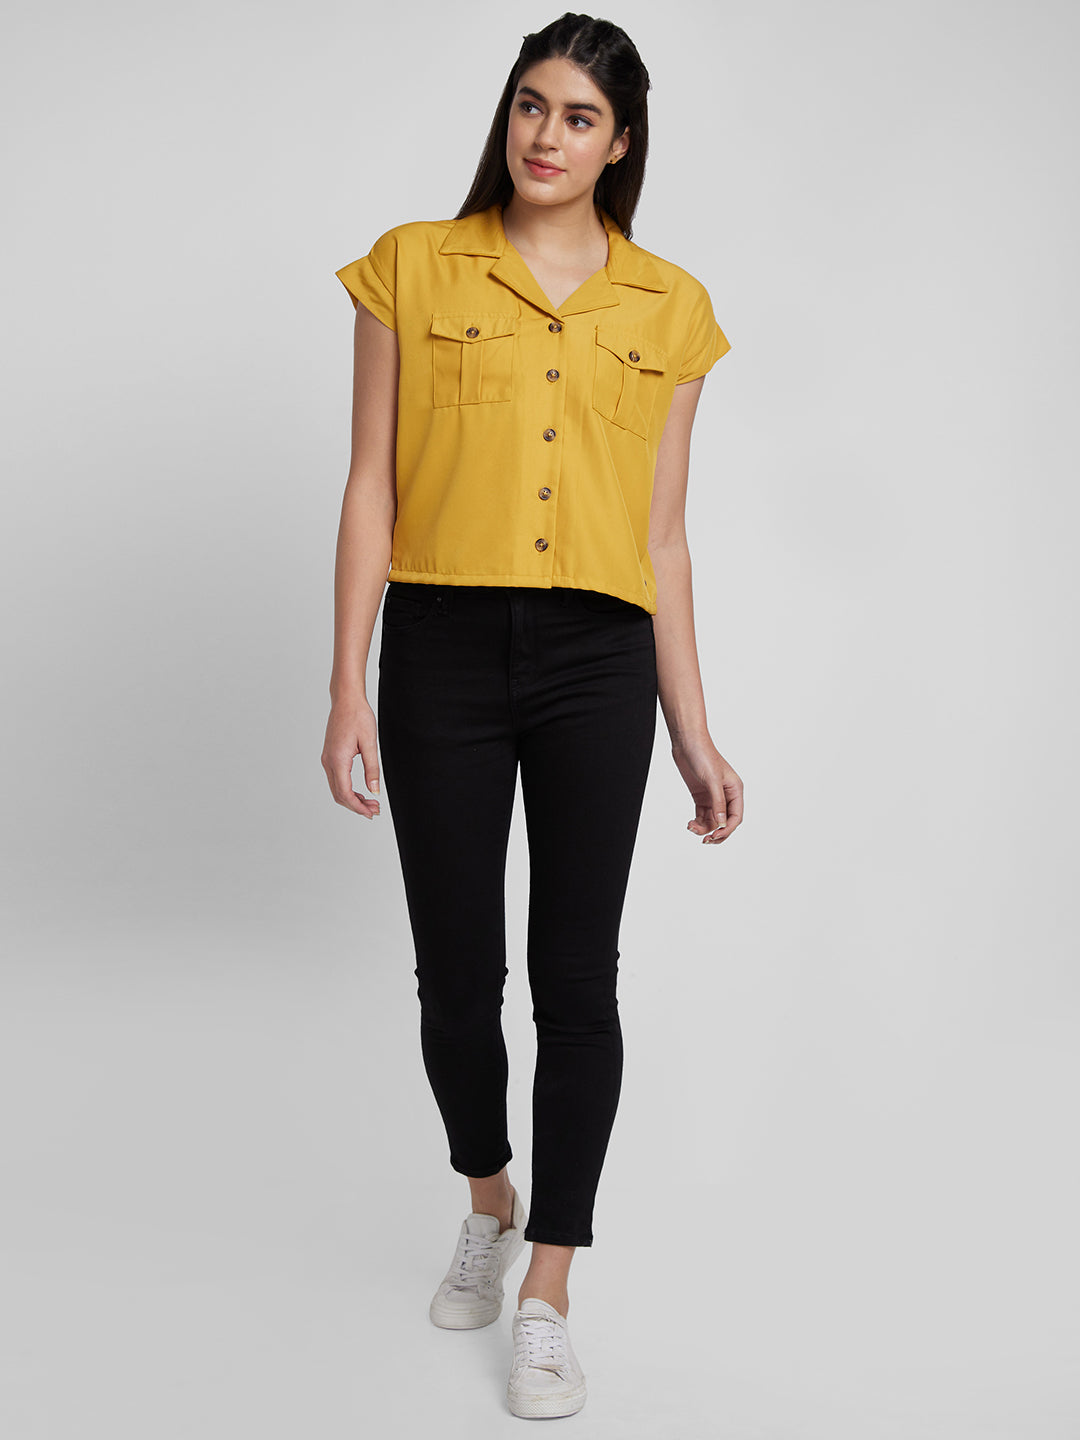 Spykar Women Ochre Yellow Cotton Slim Fit Cap Sleeve Denim Shirts